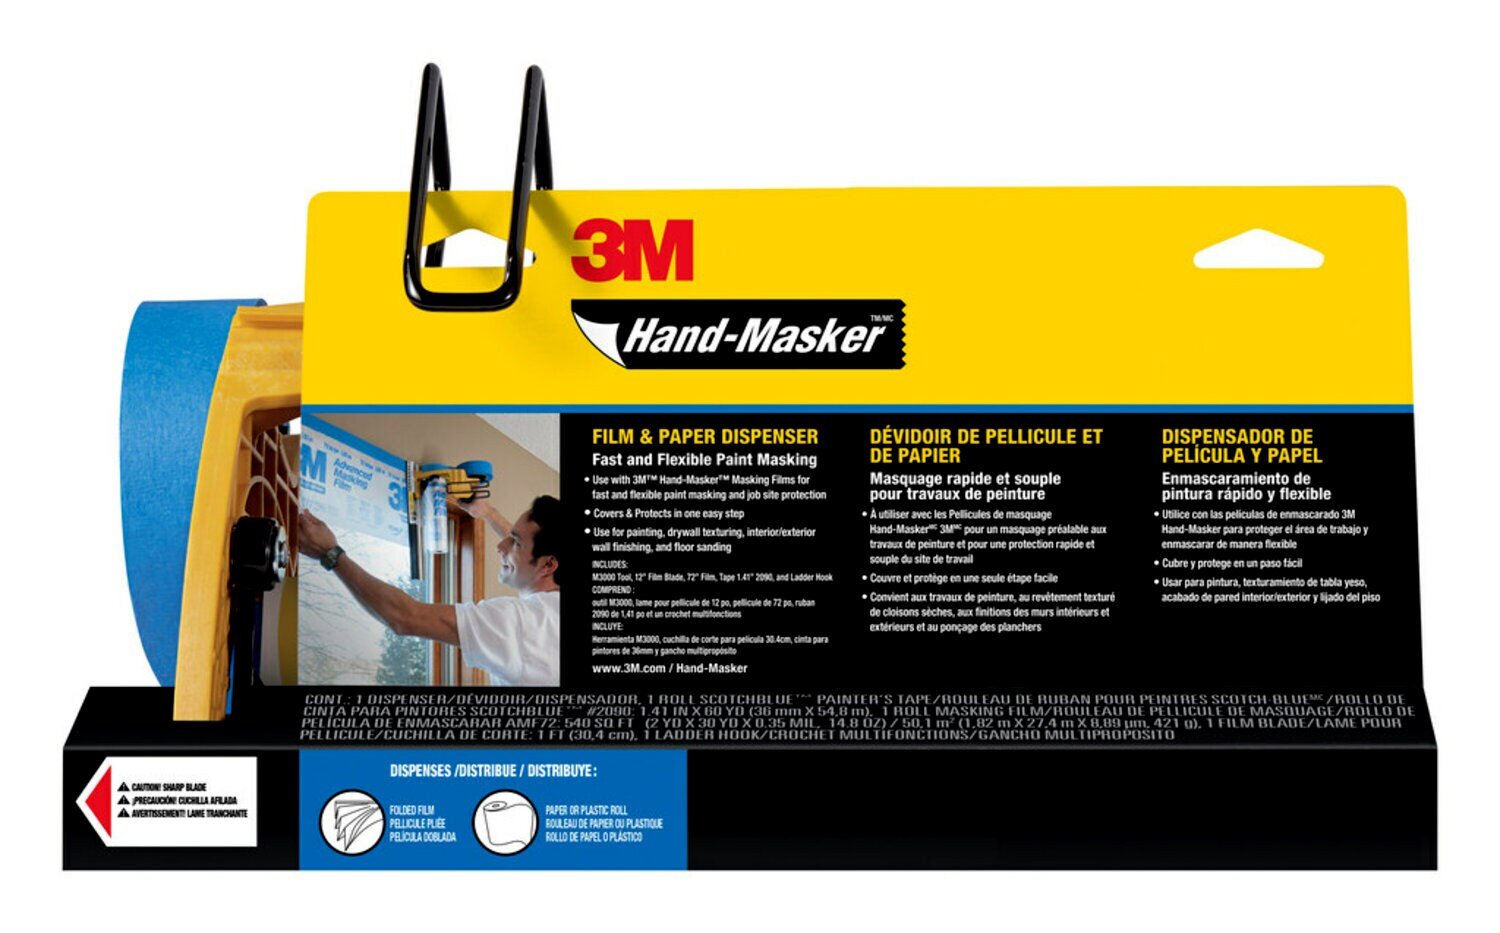 7100265975 - 3M Hand-Masker Pre-Loaded Dispensers M3000 PAK, Masking film tape kit